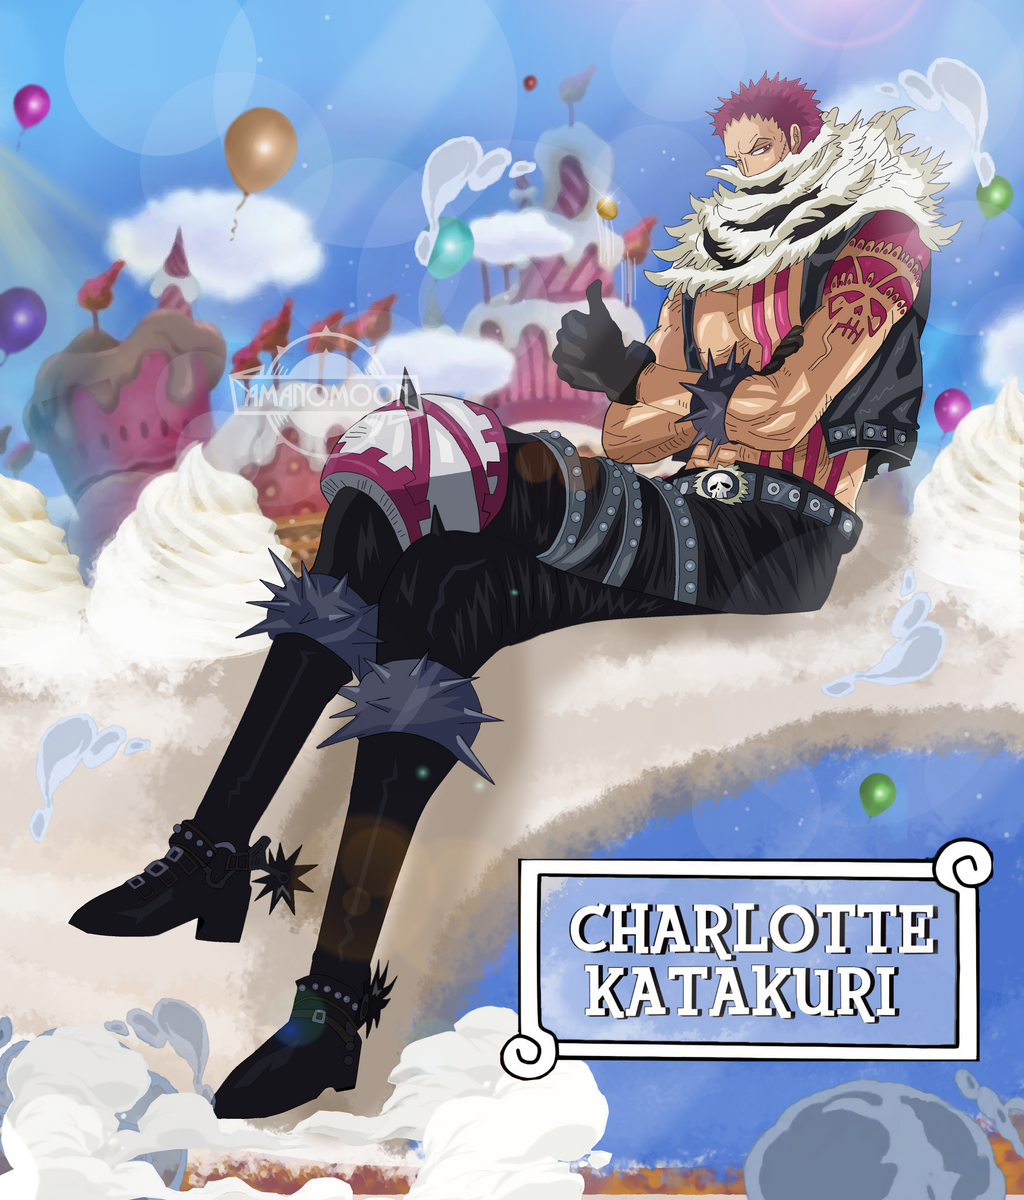 Character from one piece, charlotte katakuri